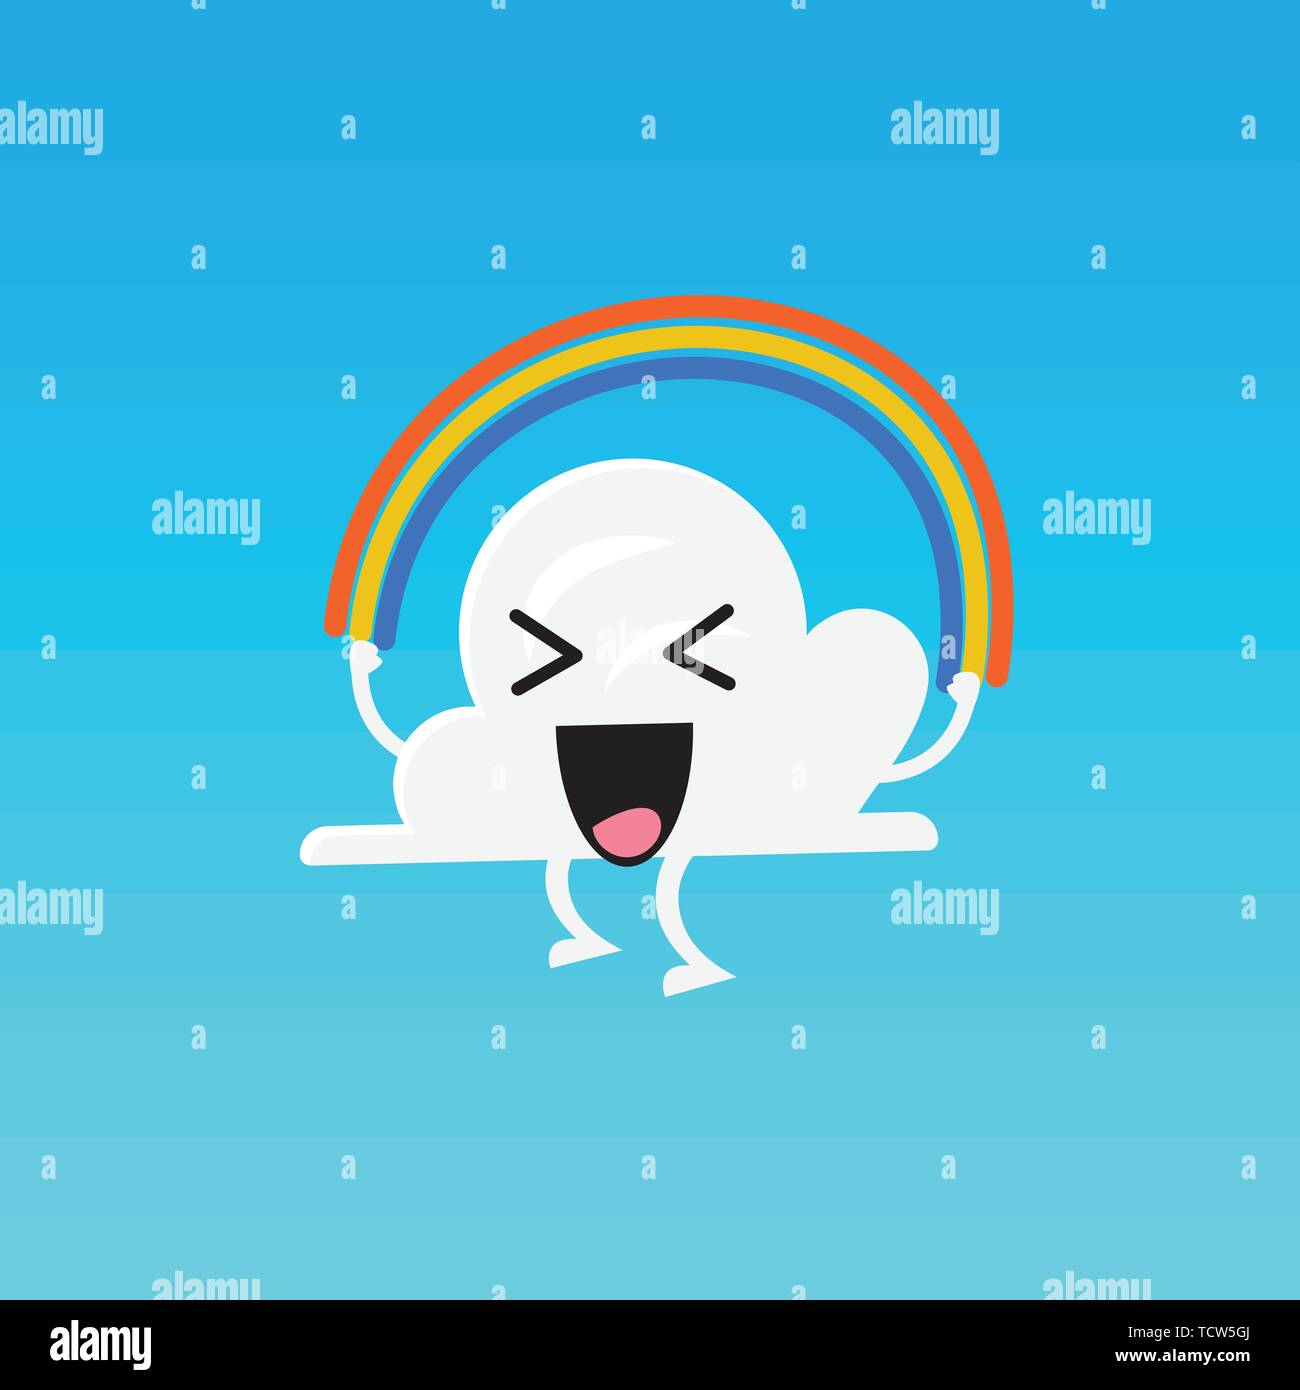 Cloud character emoji jumping rainbow rope. Vector illustration Stock Vector